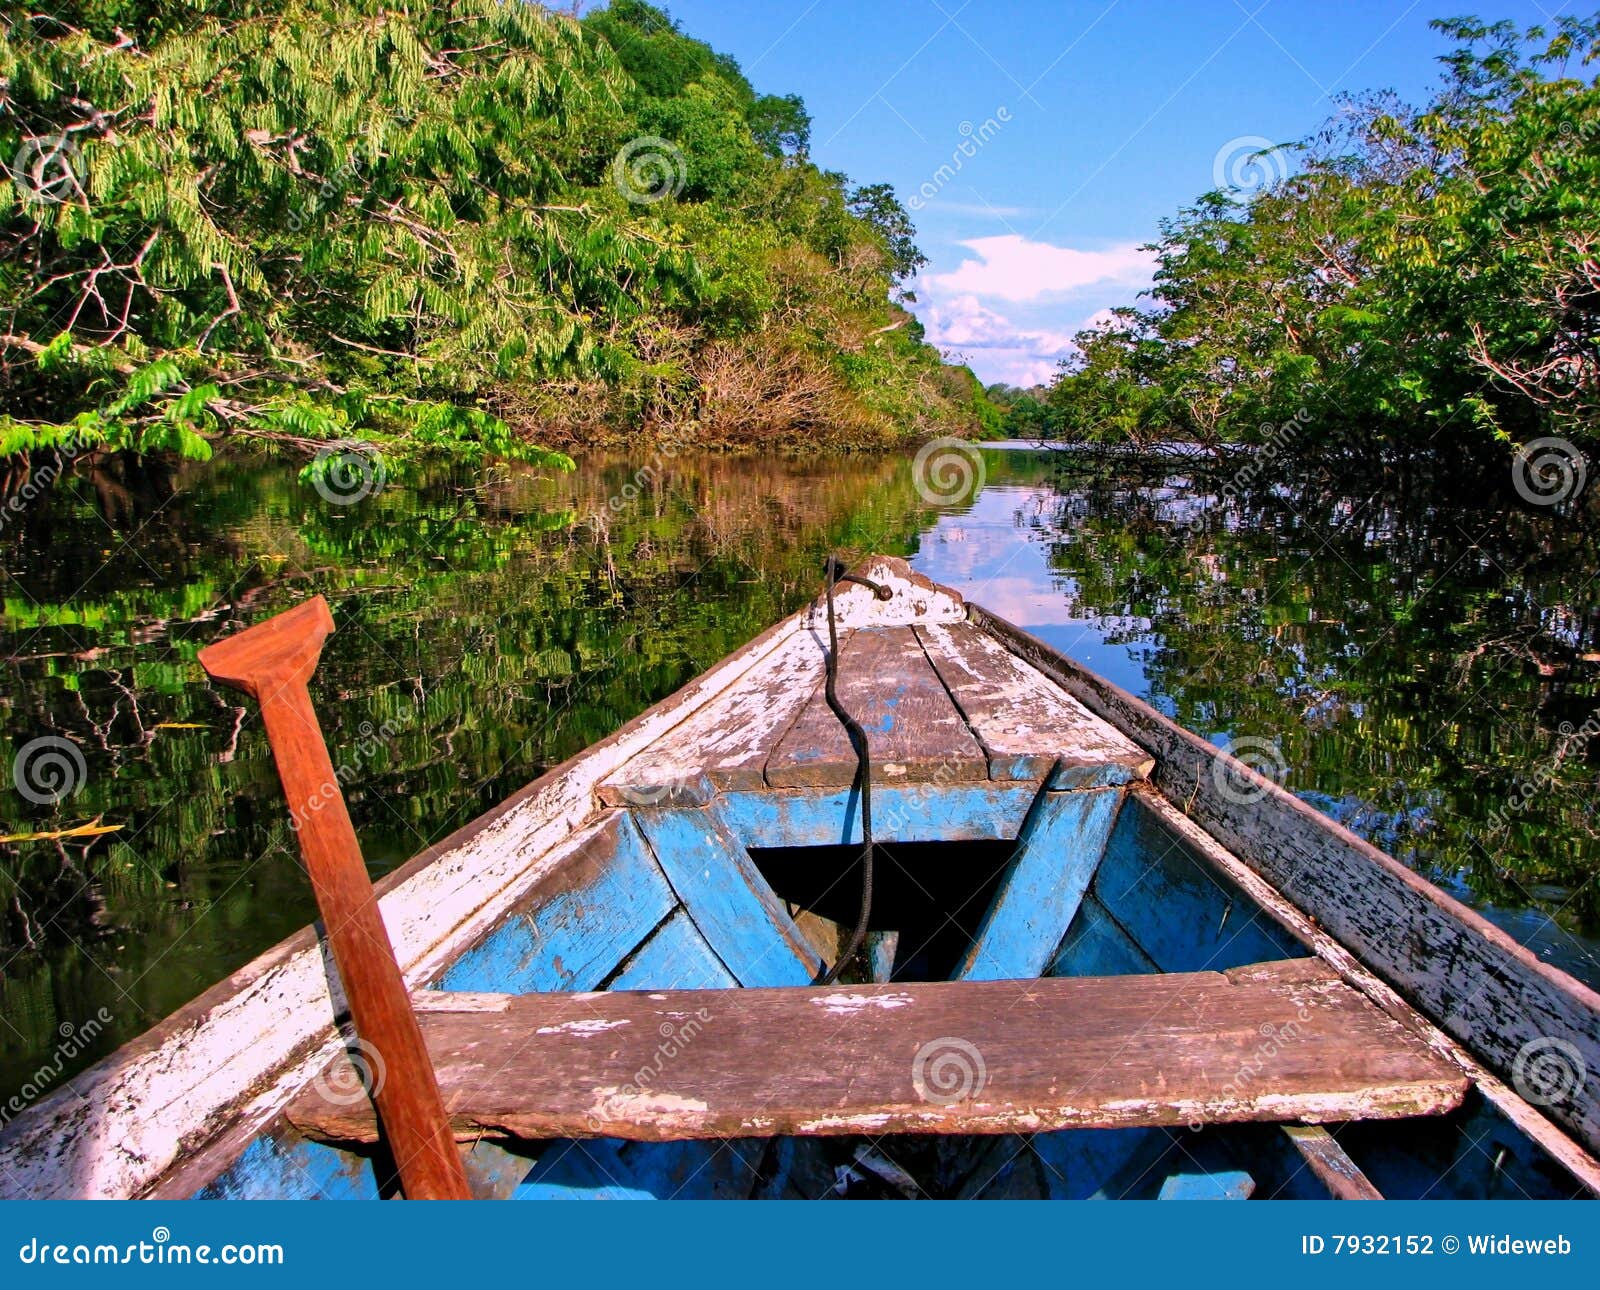 amazonian boat